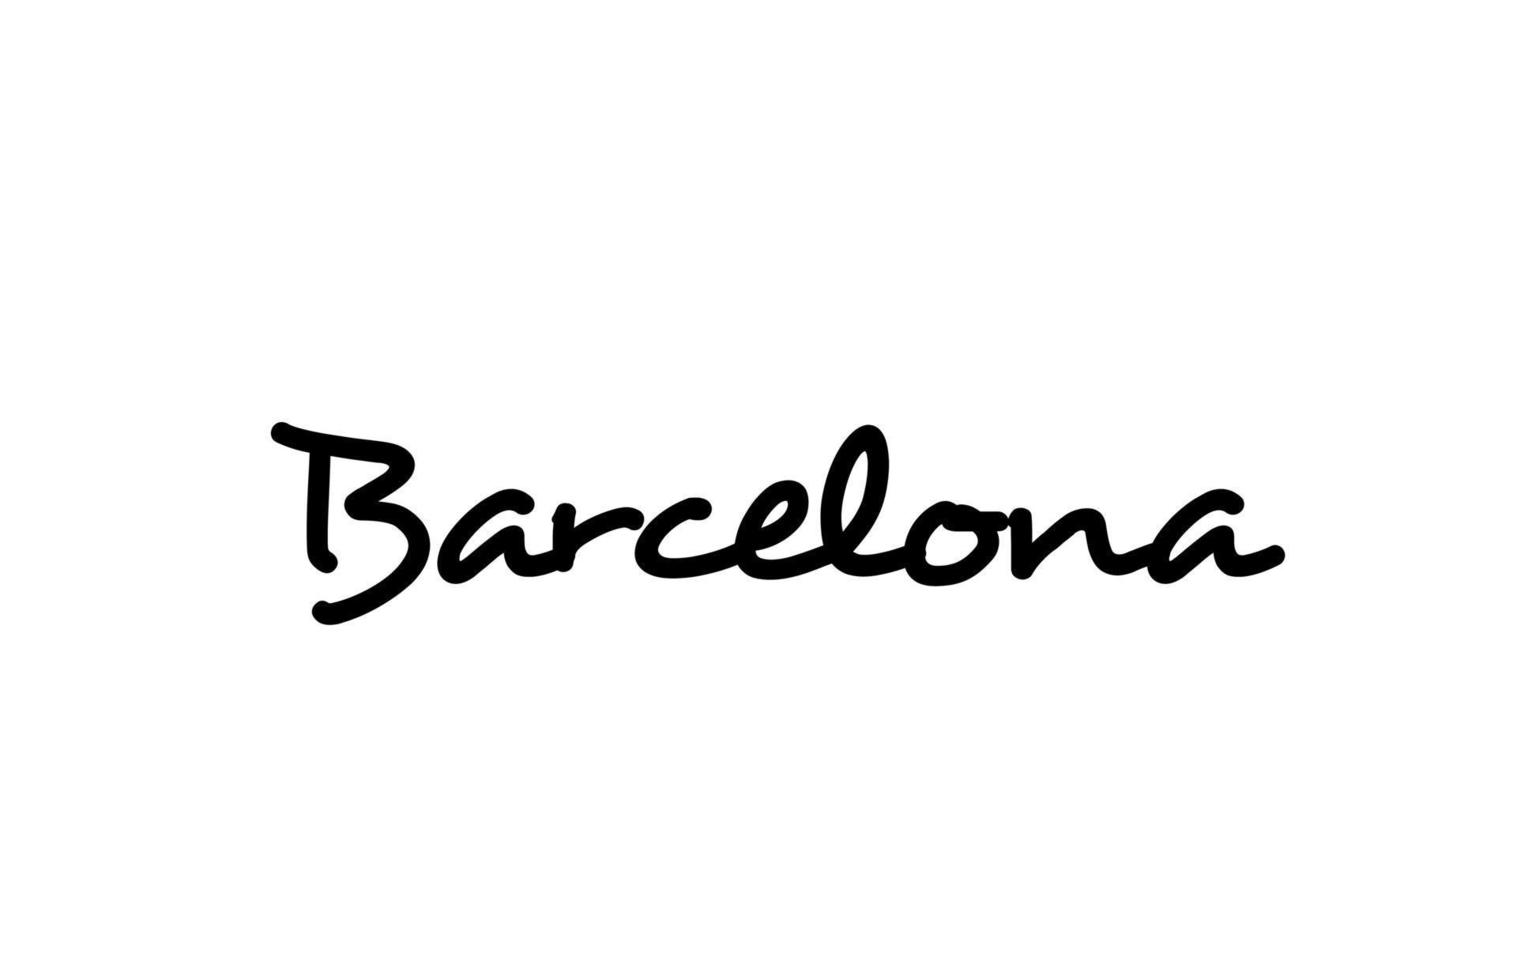 Barcelona Stadt handgeschriebener Worttext Handbeschriftung. Kalligraphie-Text. Typografie in schwarzer Farbe vektor